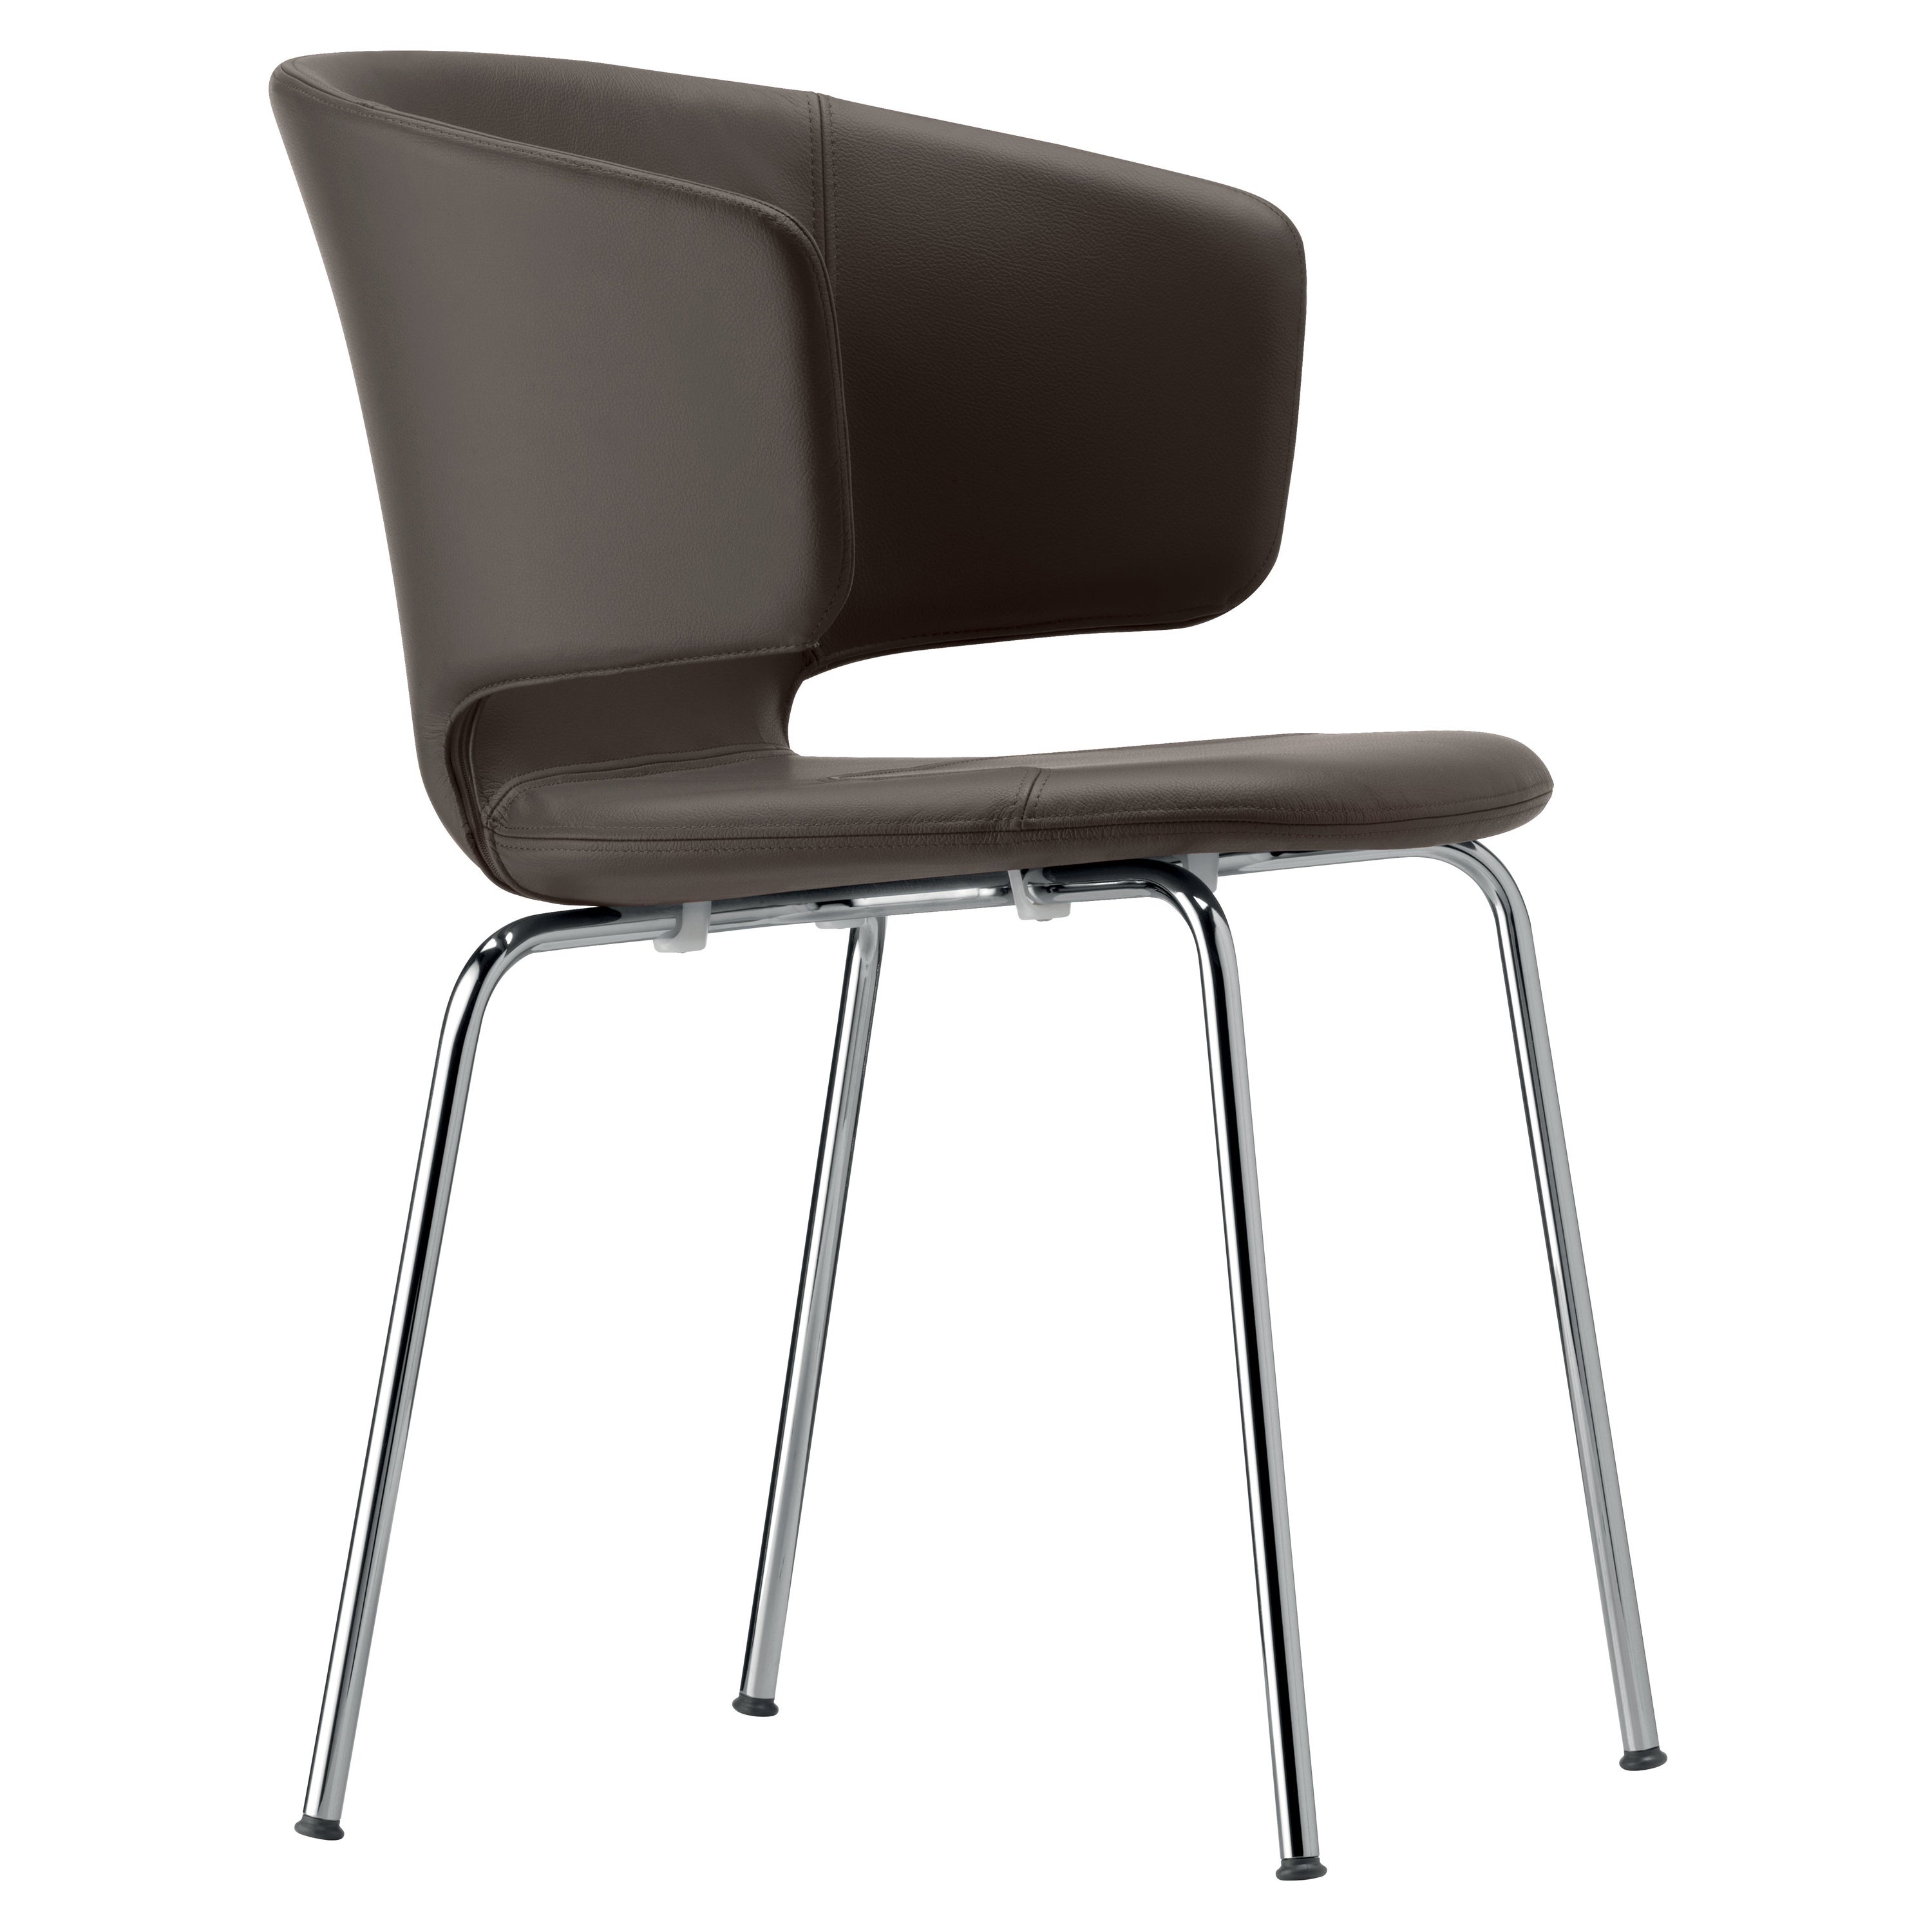 Alias 503 Taormina Chair in Brown Seat & Chromed Steel Frame by Alfredo Häberli For Sale